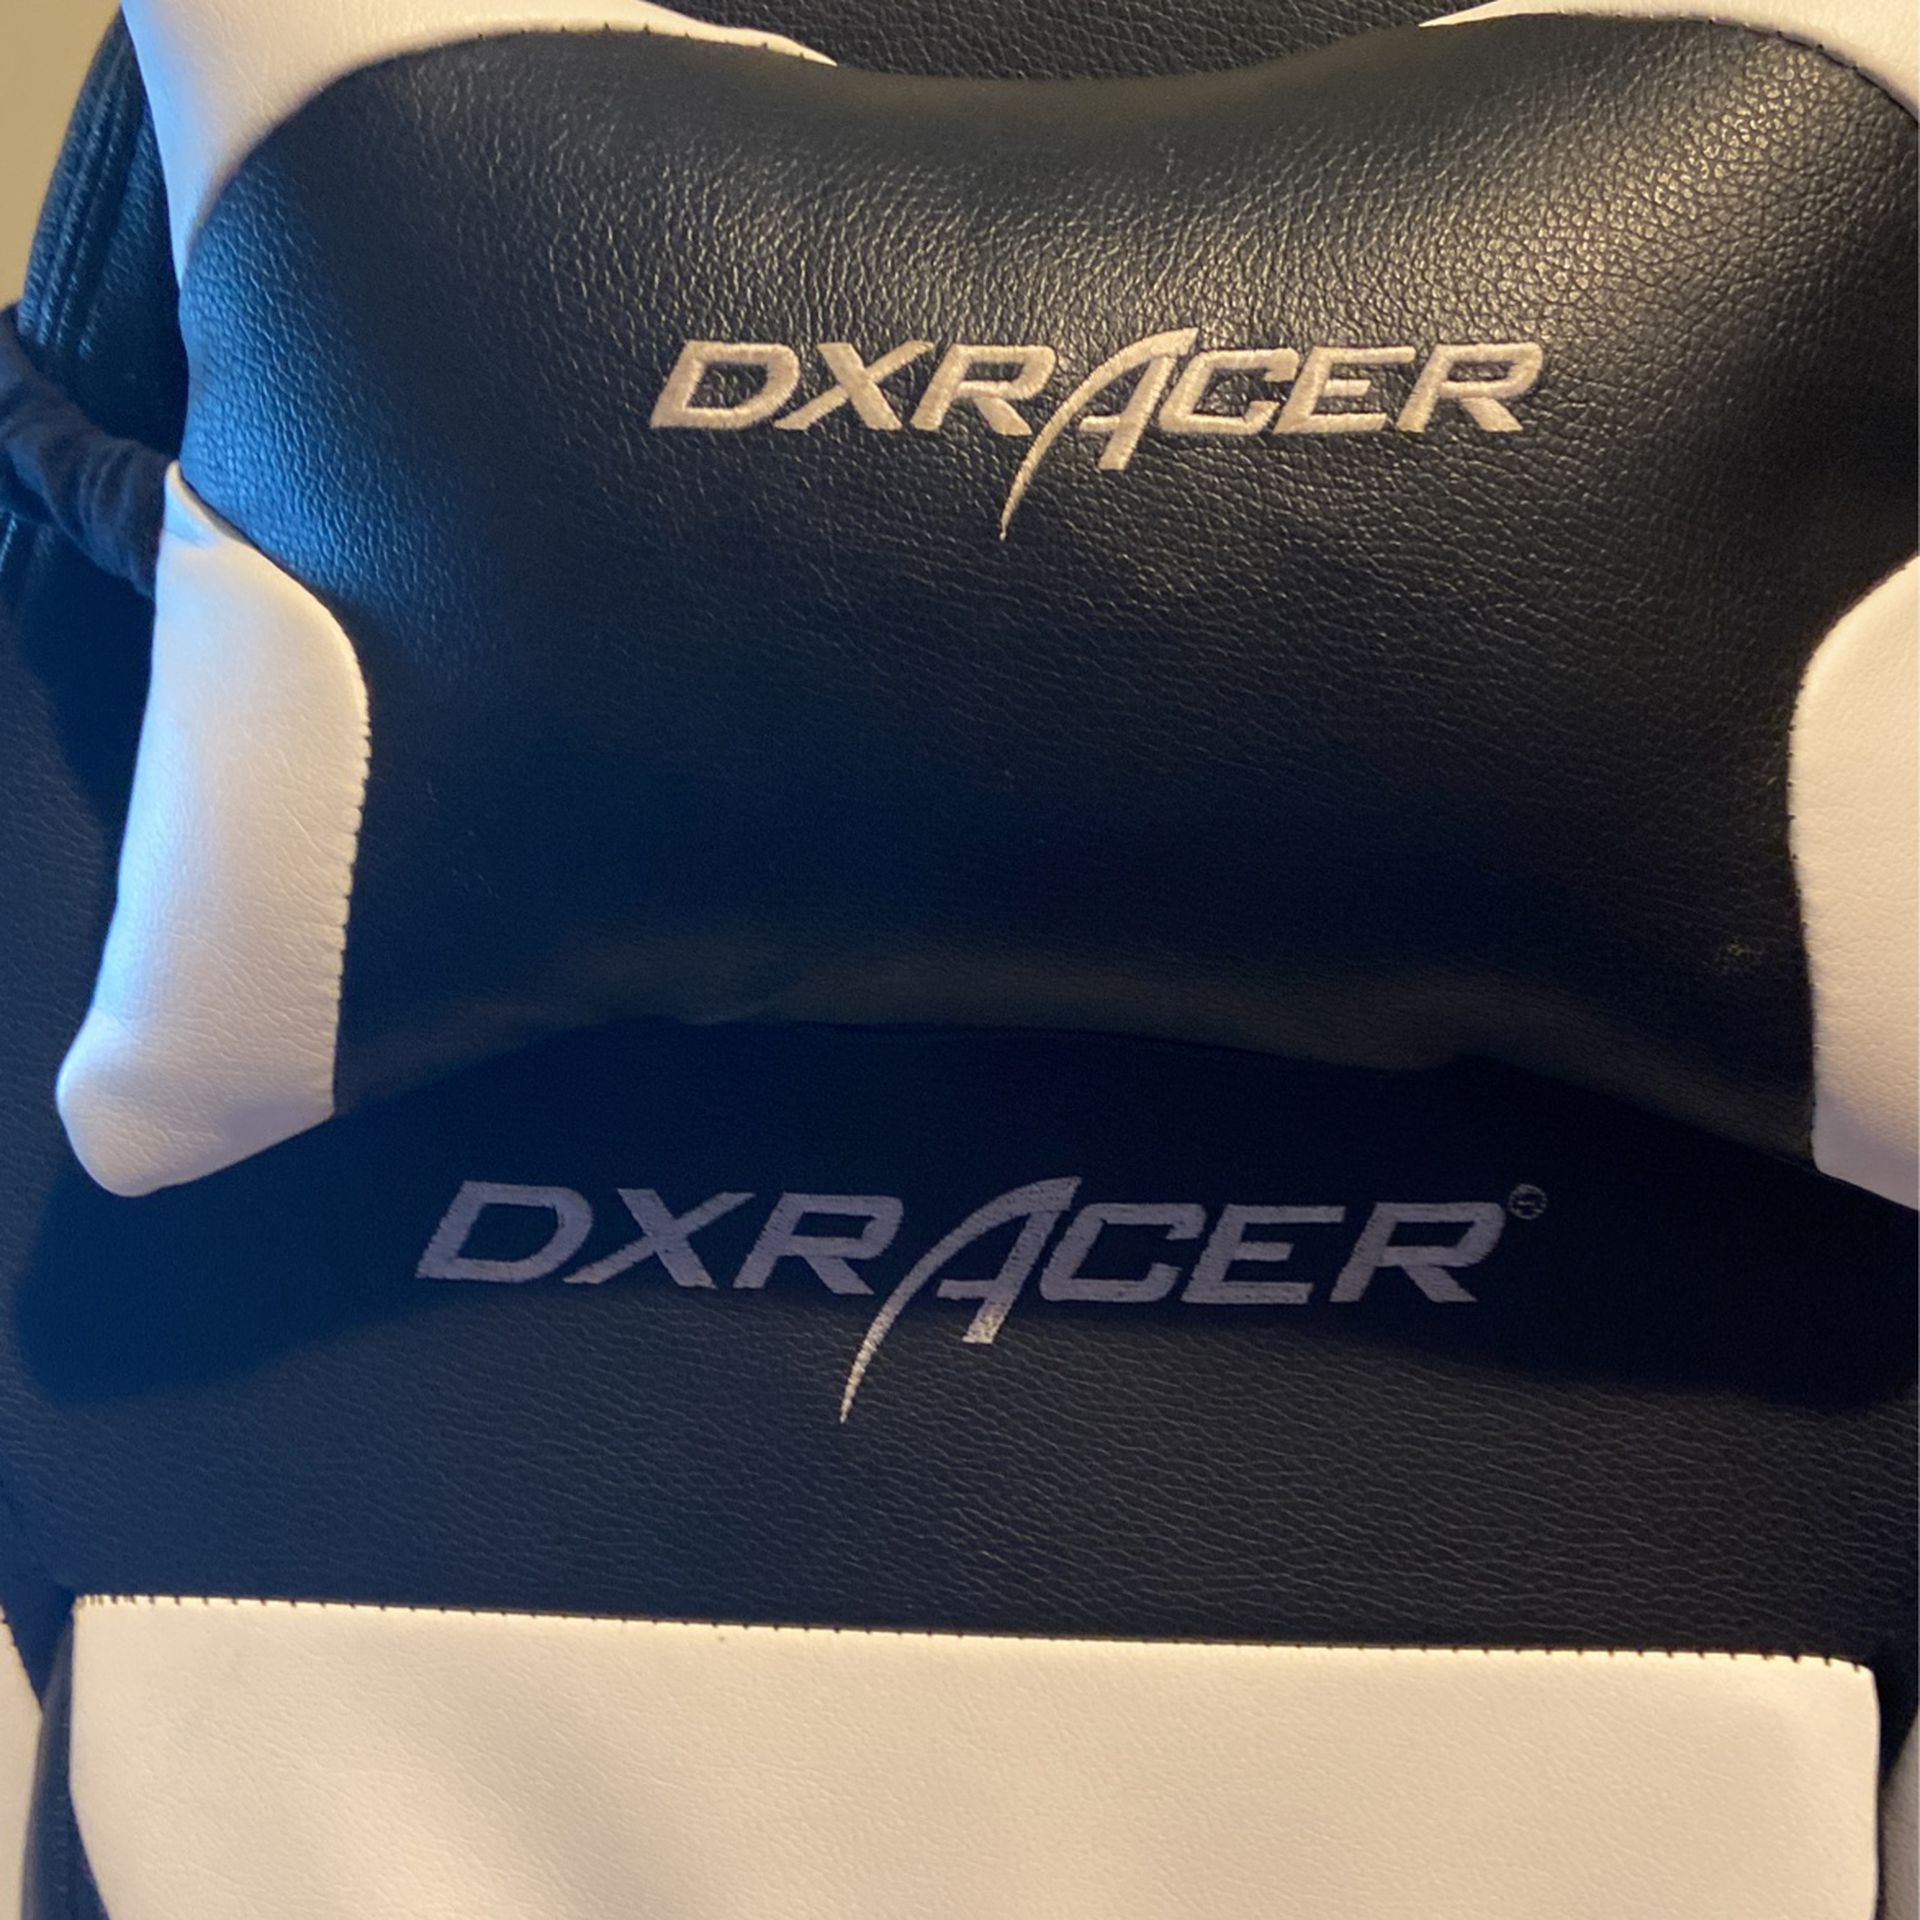 DxrAcer Gaming Chair